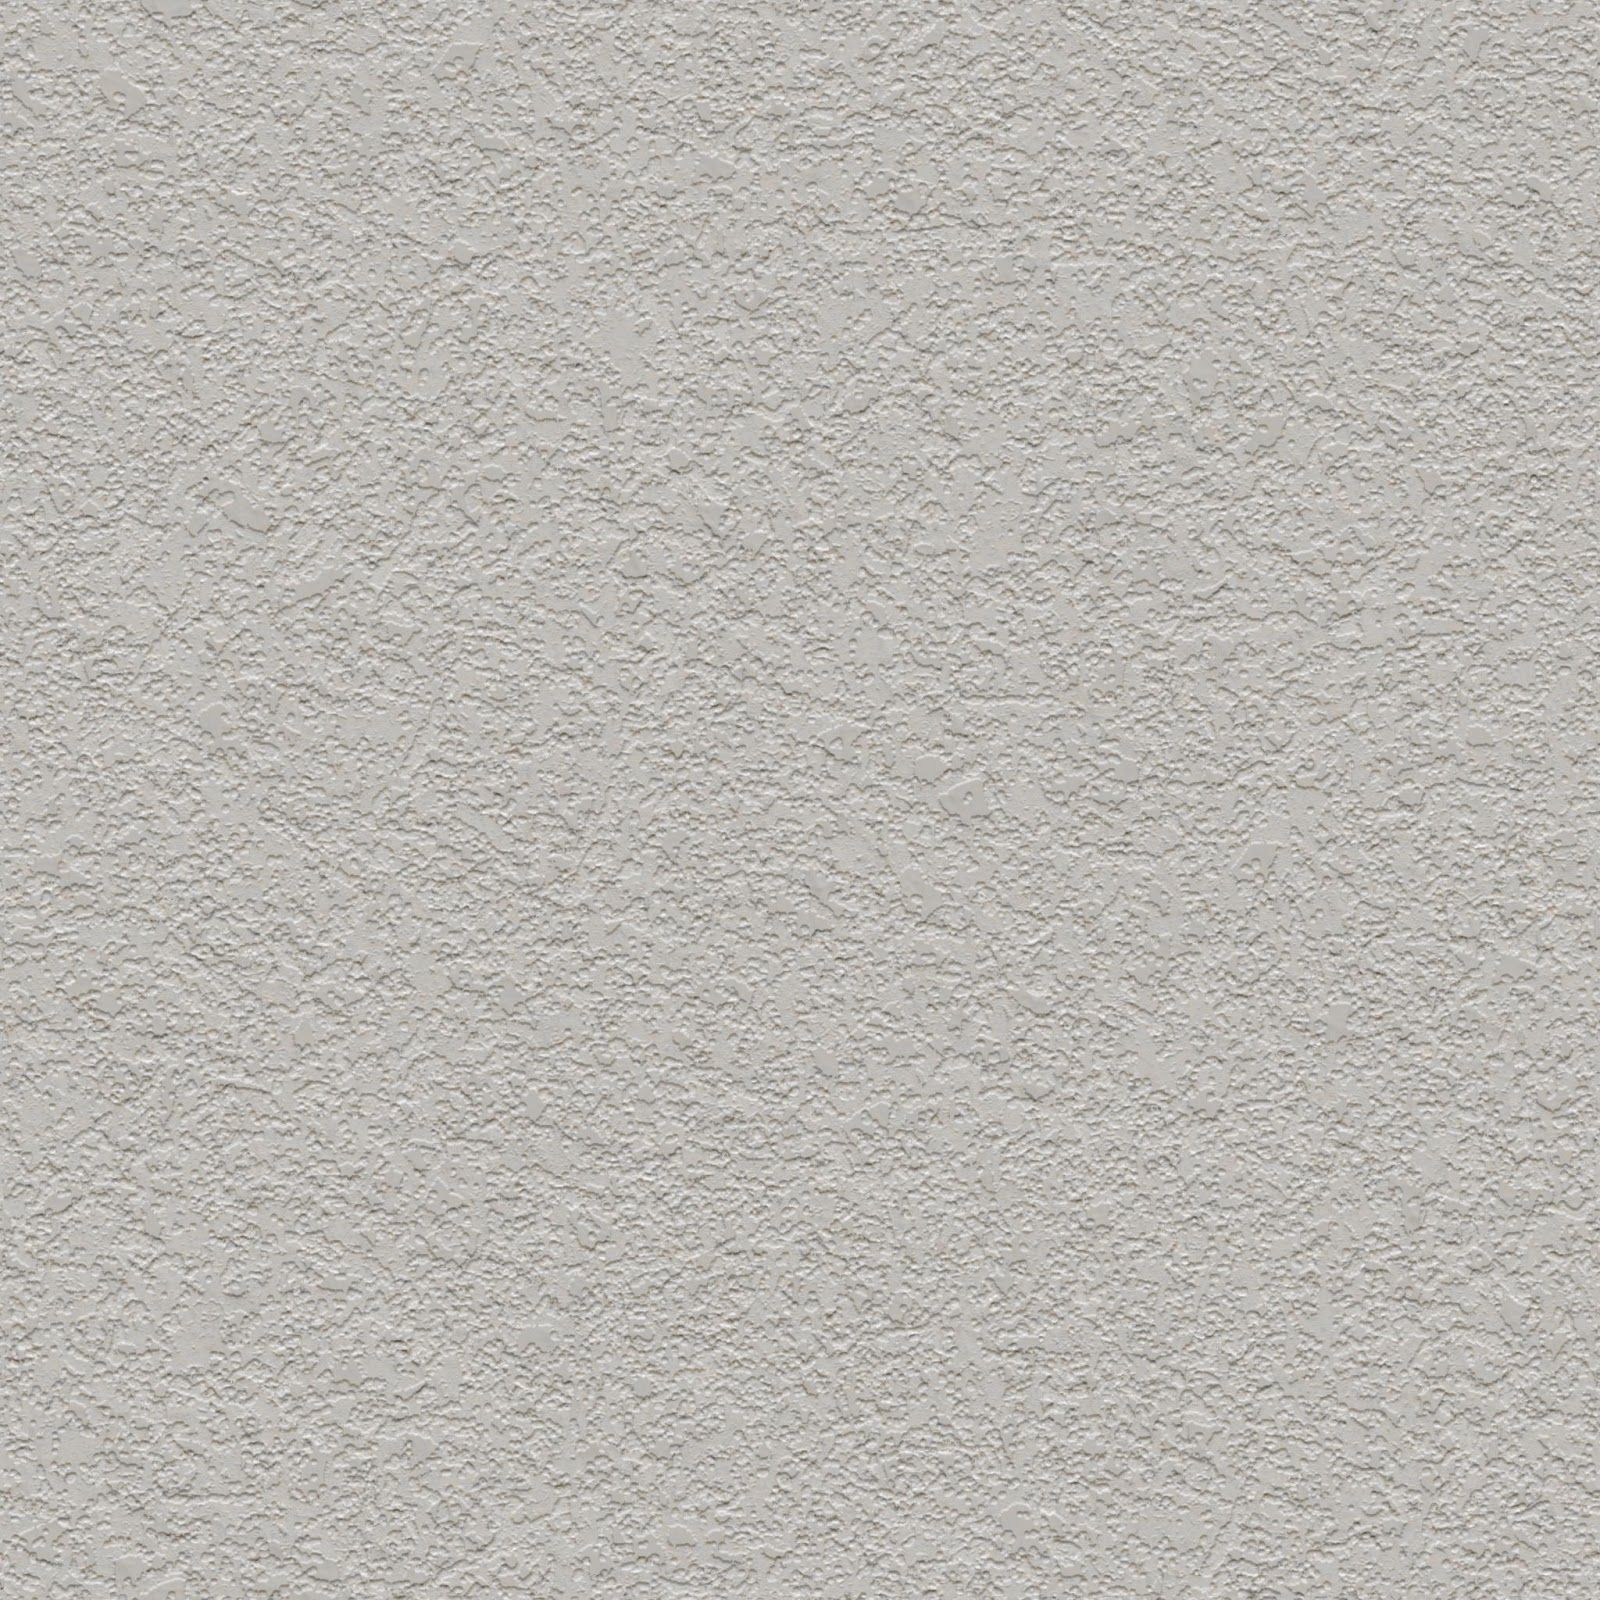 Smooth Stucco Wall Texture Seamless | High Resolution Seamless ...